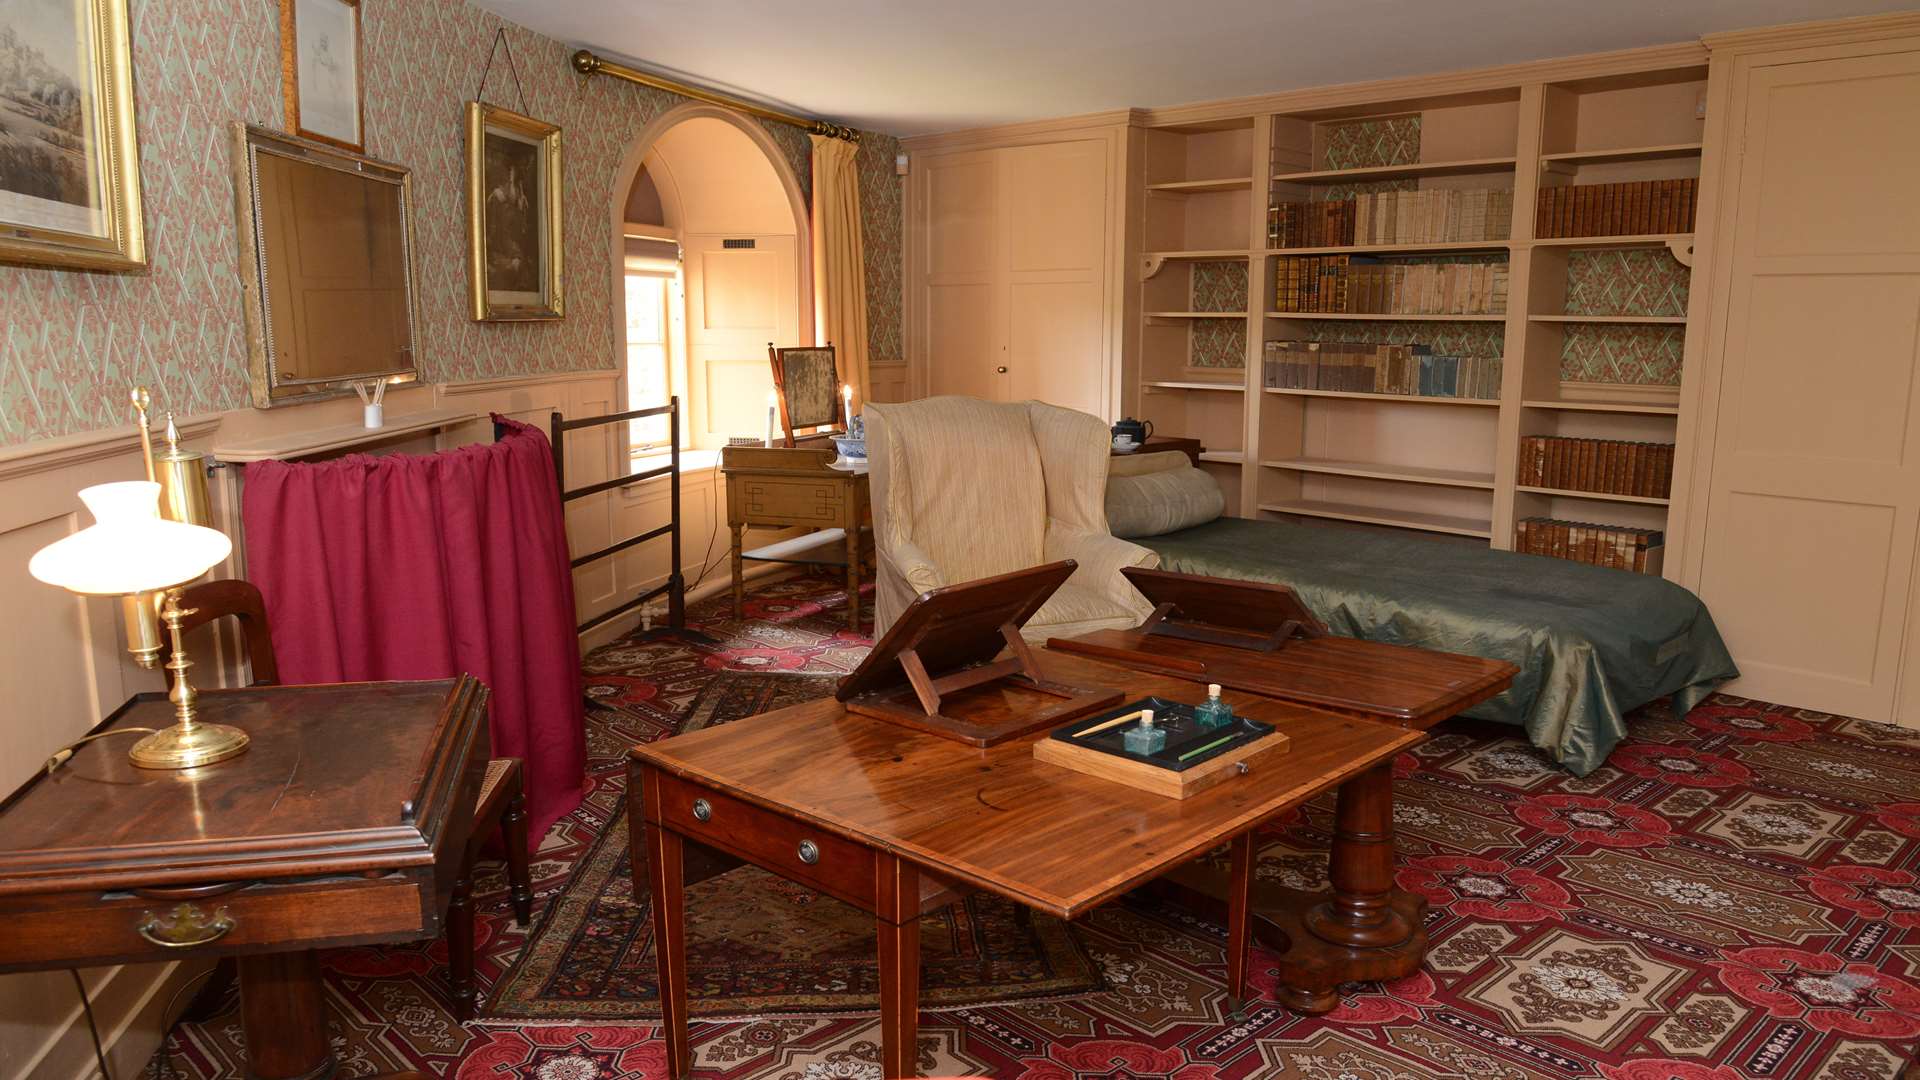 The Duke of Wellington's bedroom at Walmer